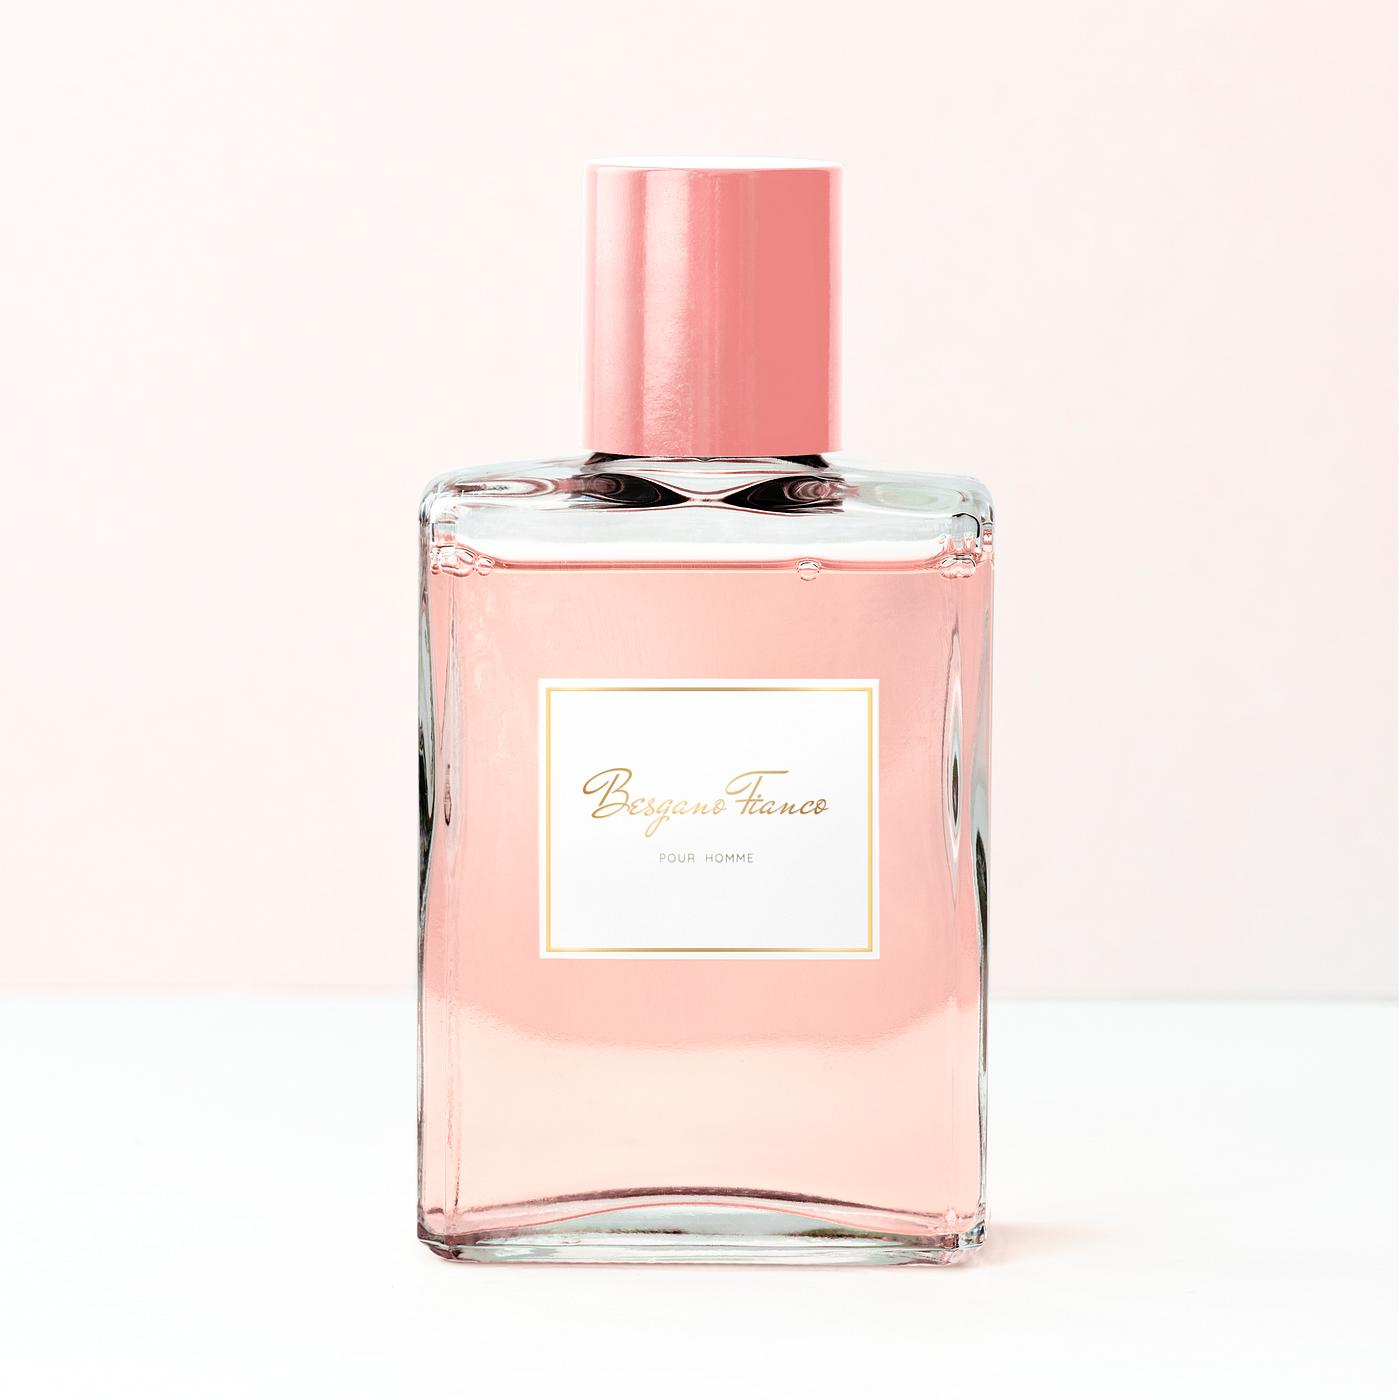 Download Women's fragrance bottle mockup | Royalty free stock psd ...